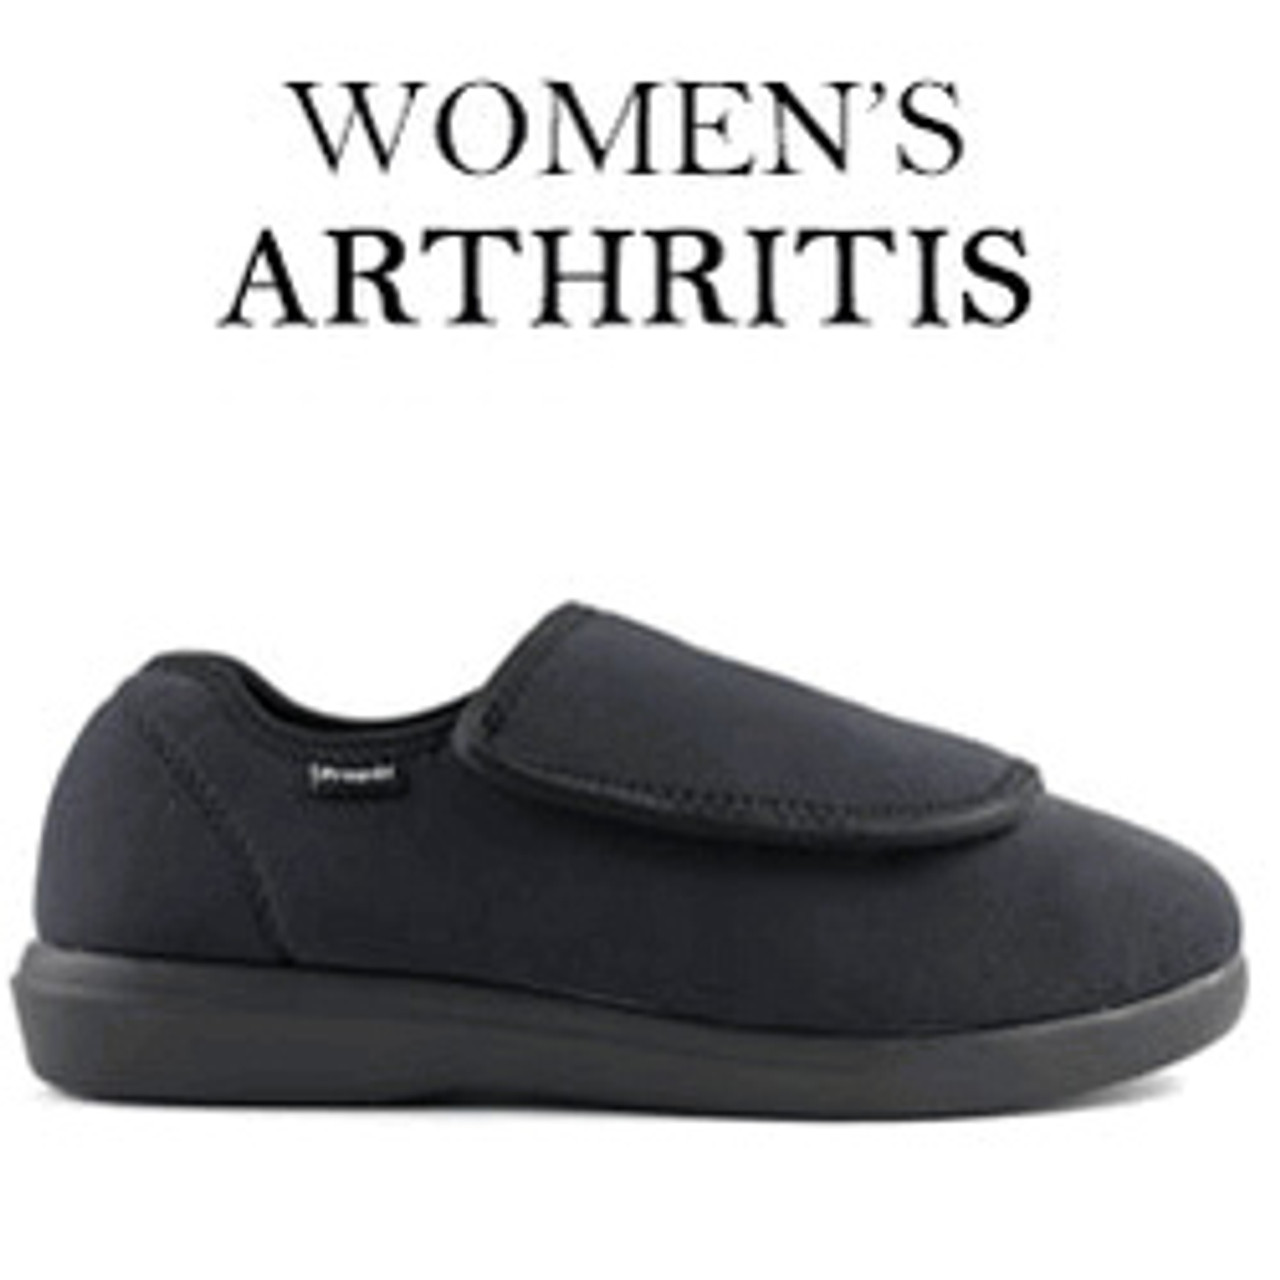 Arthritis Shoes For Women | Arthritic Feet